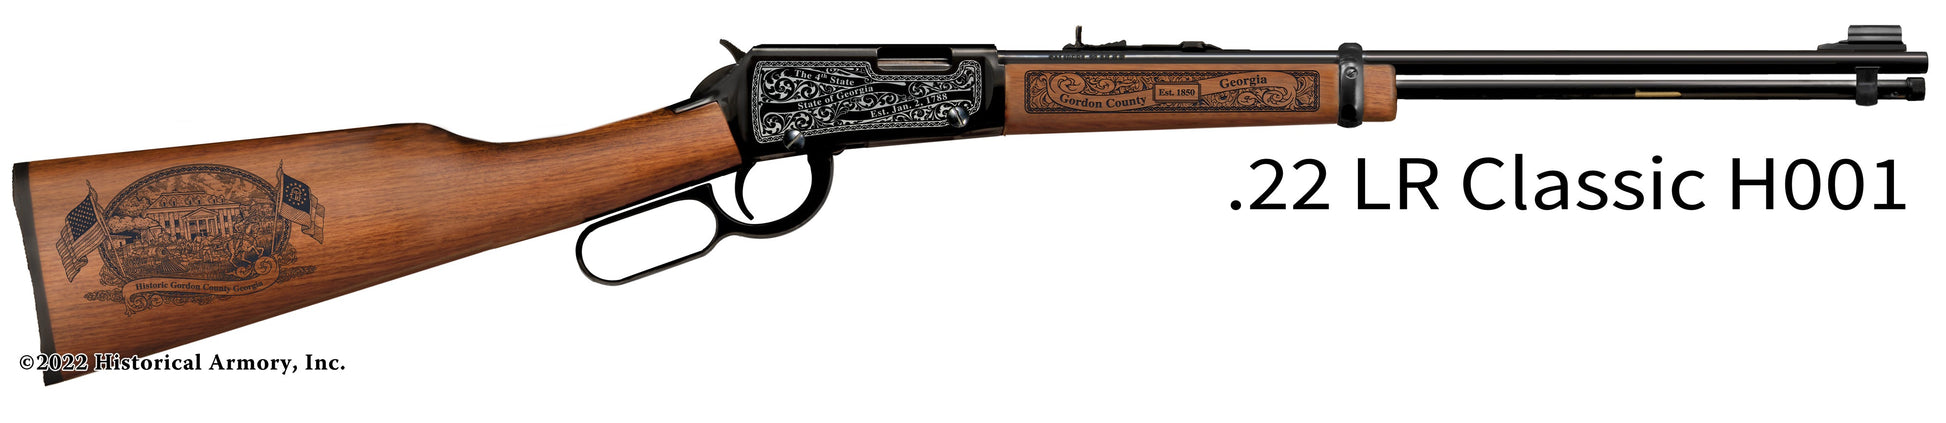 Gordon County Georgia Engraved Henry H001 Rifle